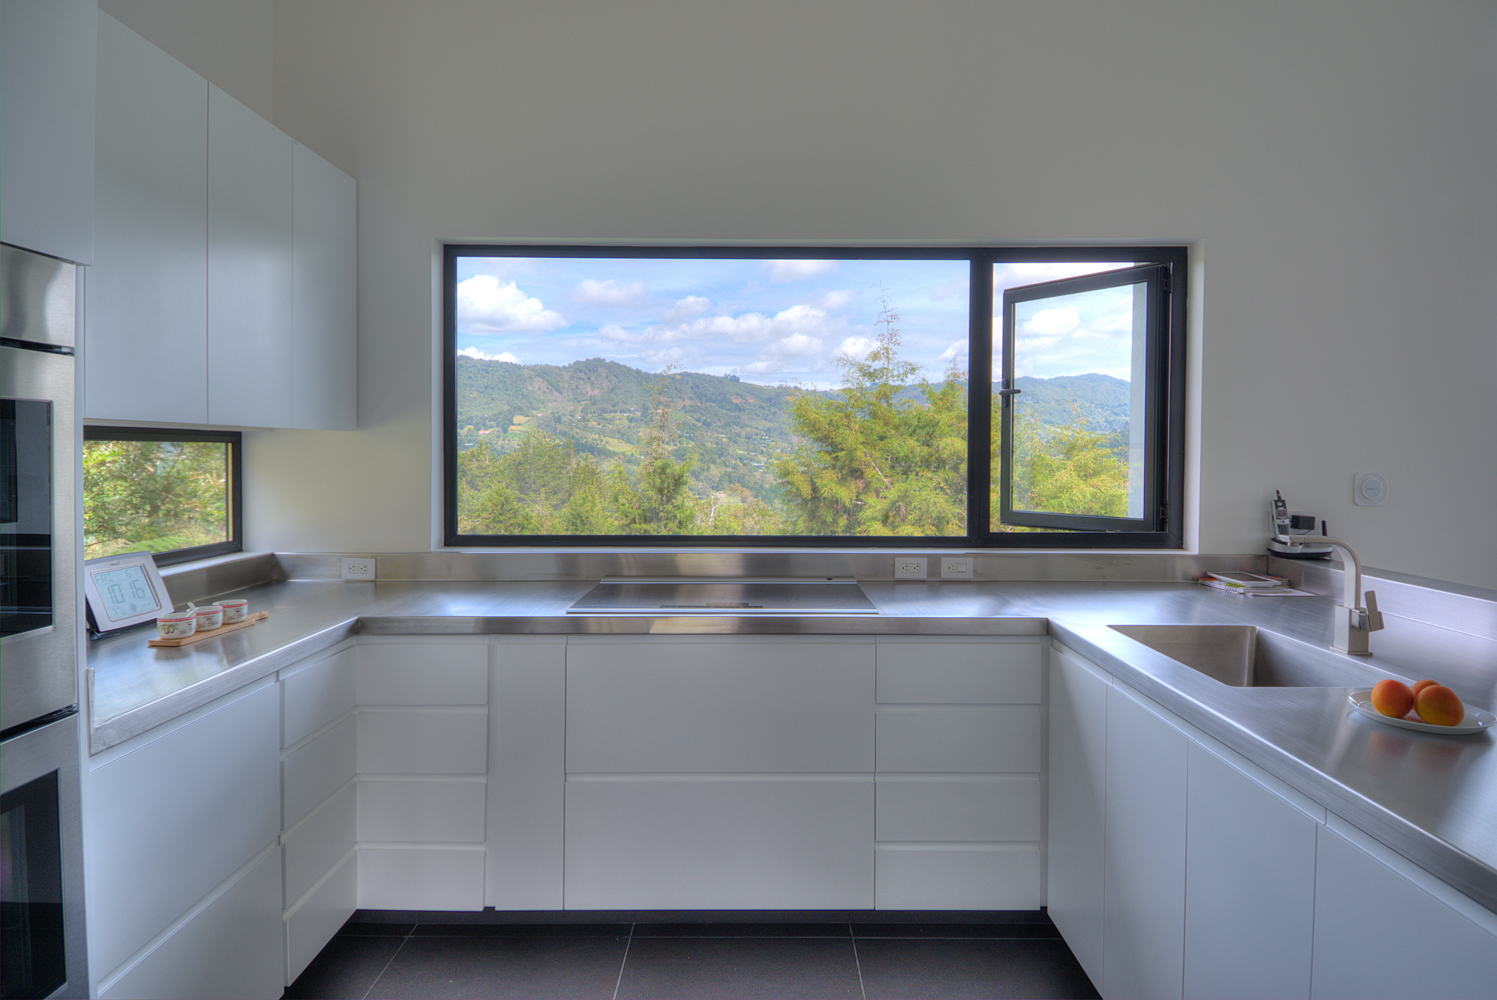 Kitchen with views onto the mountains